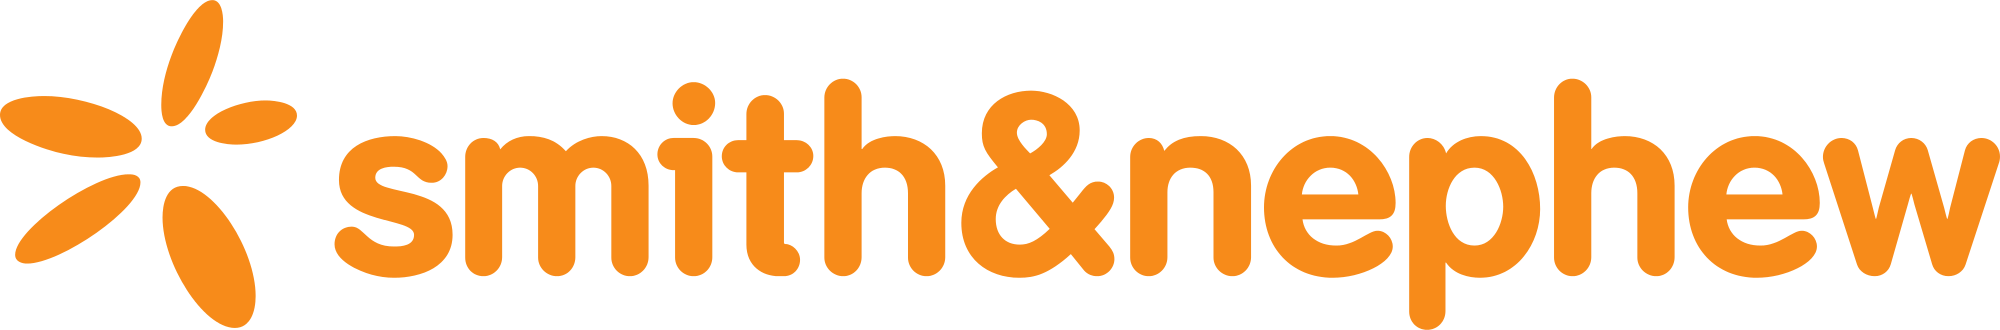 Smith_&_Nephew_logo.svg.png